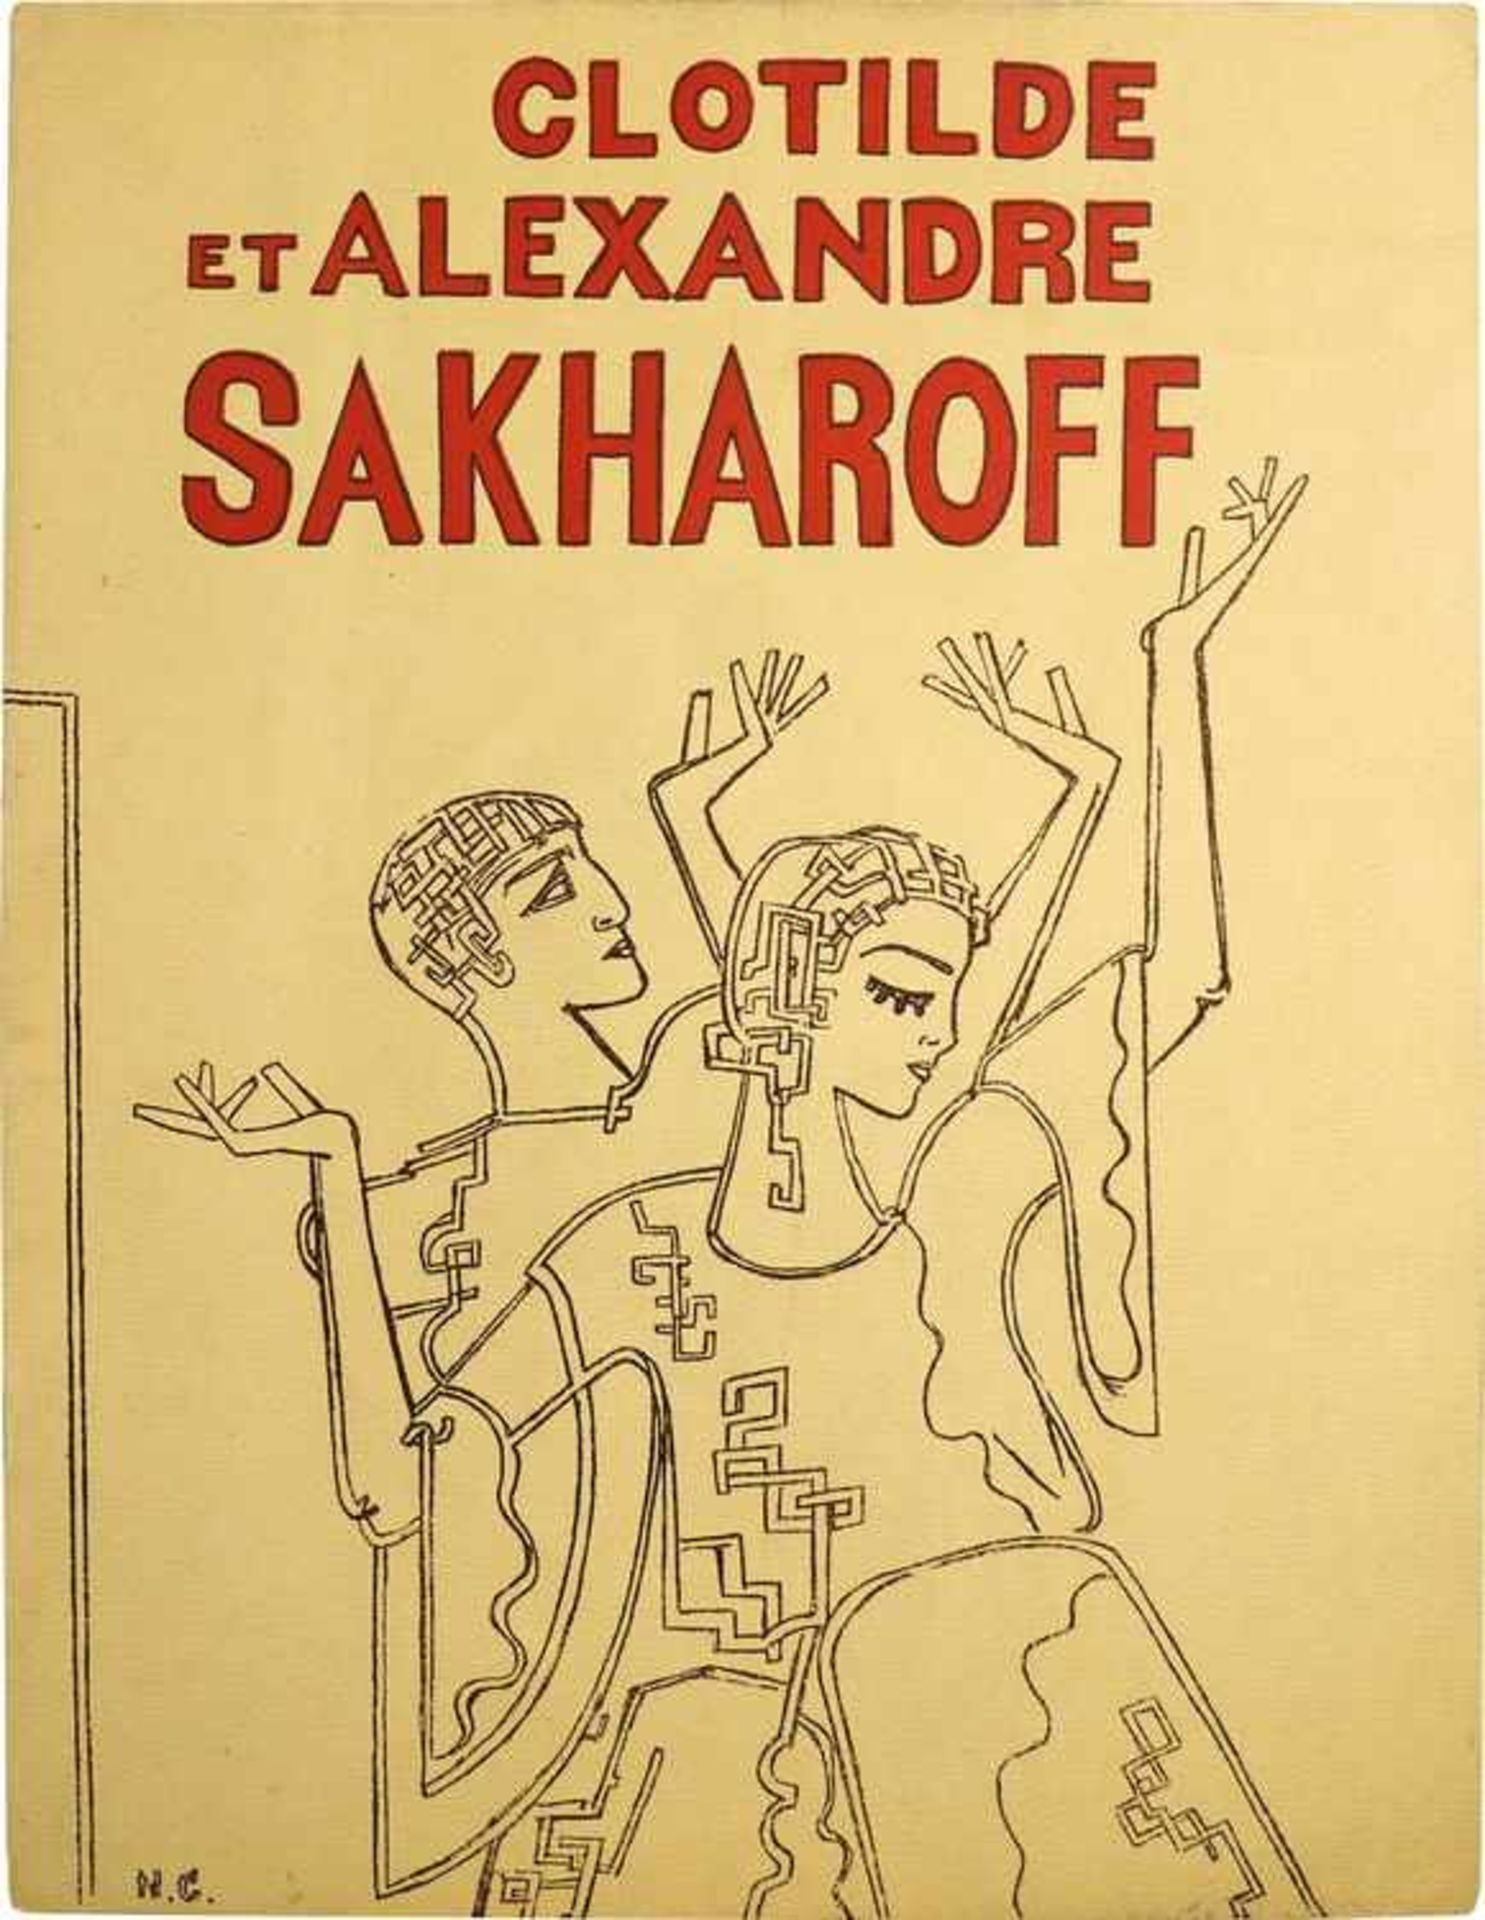 [BALLETS RUSSES, GONTSCHAROWA] Offizielles Programm: Clotilde et Alexandre Sakharoff im Théâtre